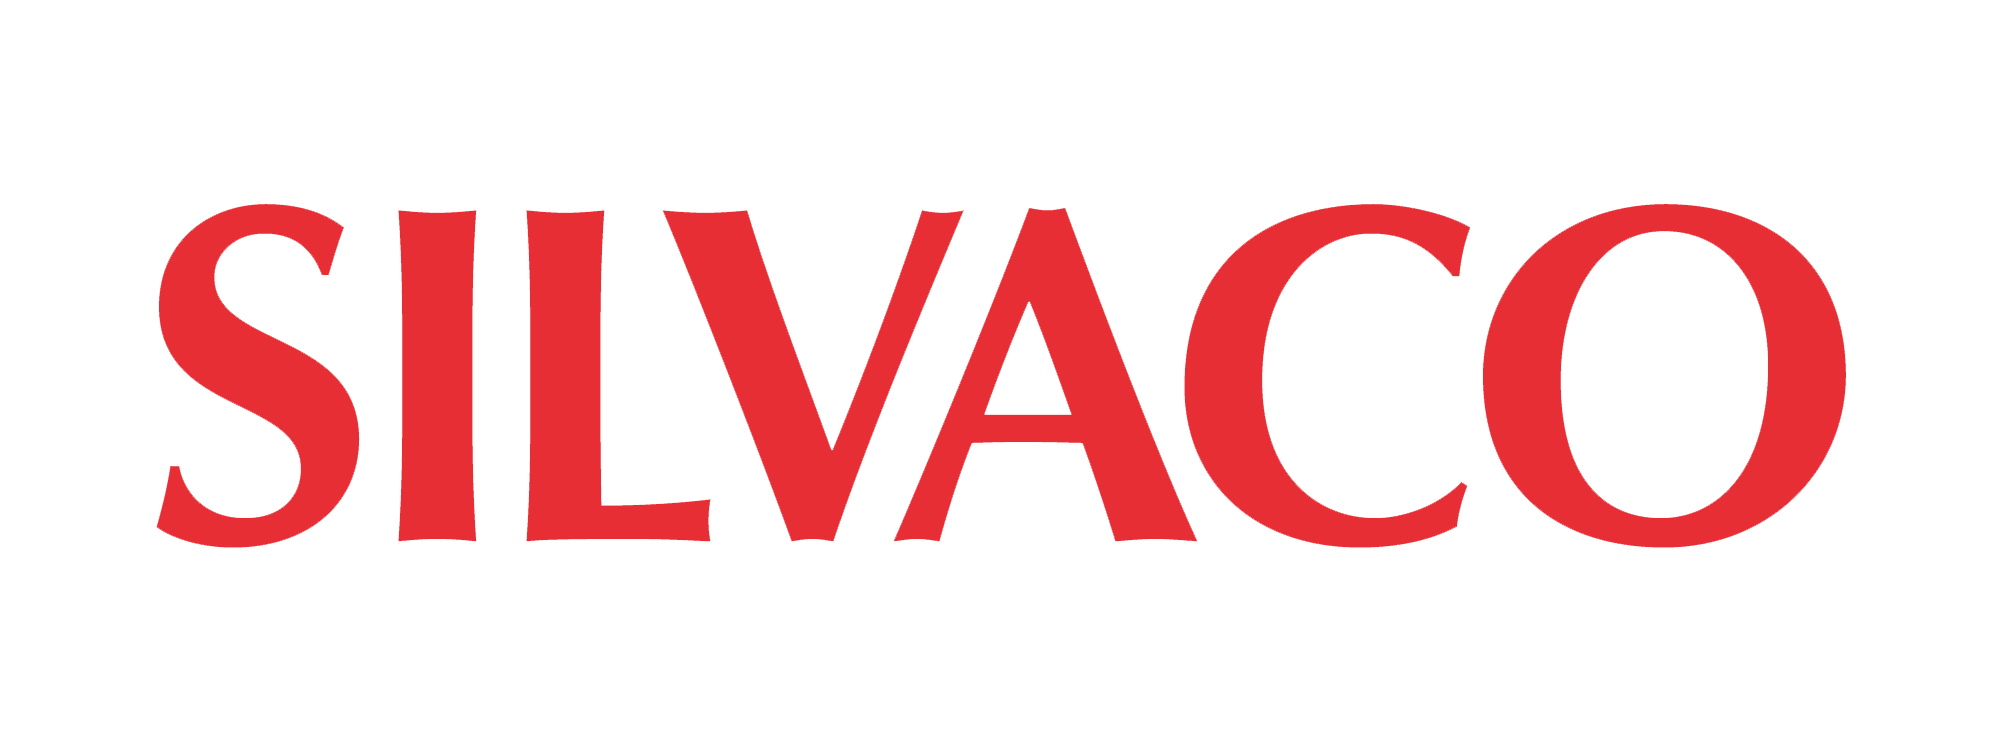 silvaco_logo